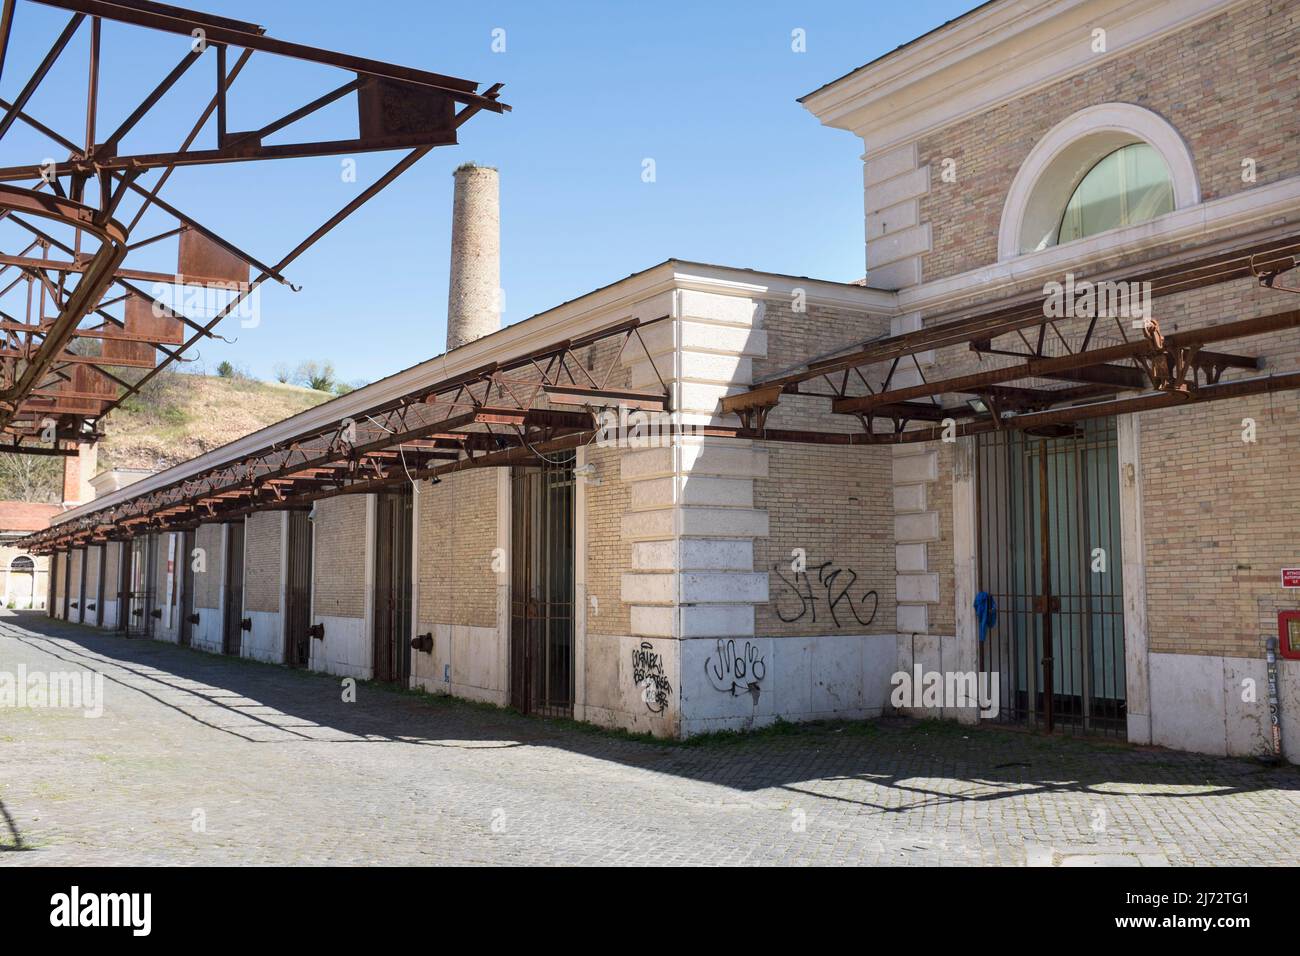 The former slaughterhouse or Mattatoio Testaccio Rome Italy - Now a contemorary Art space Stock Photo